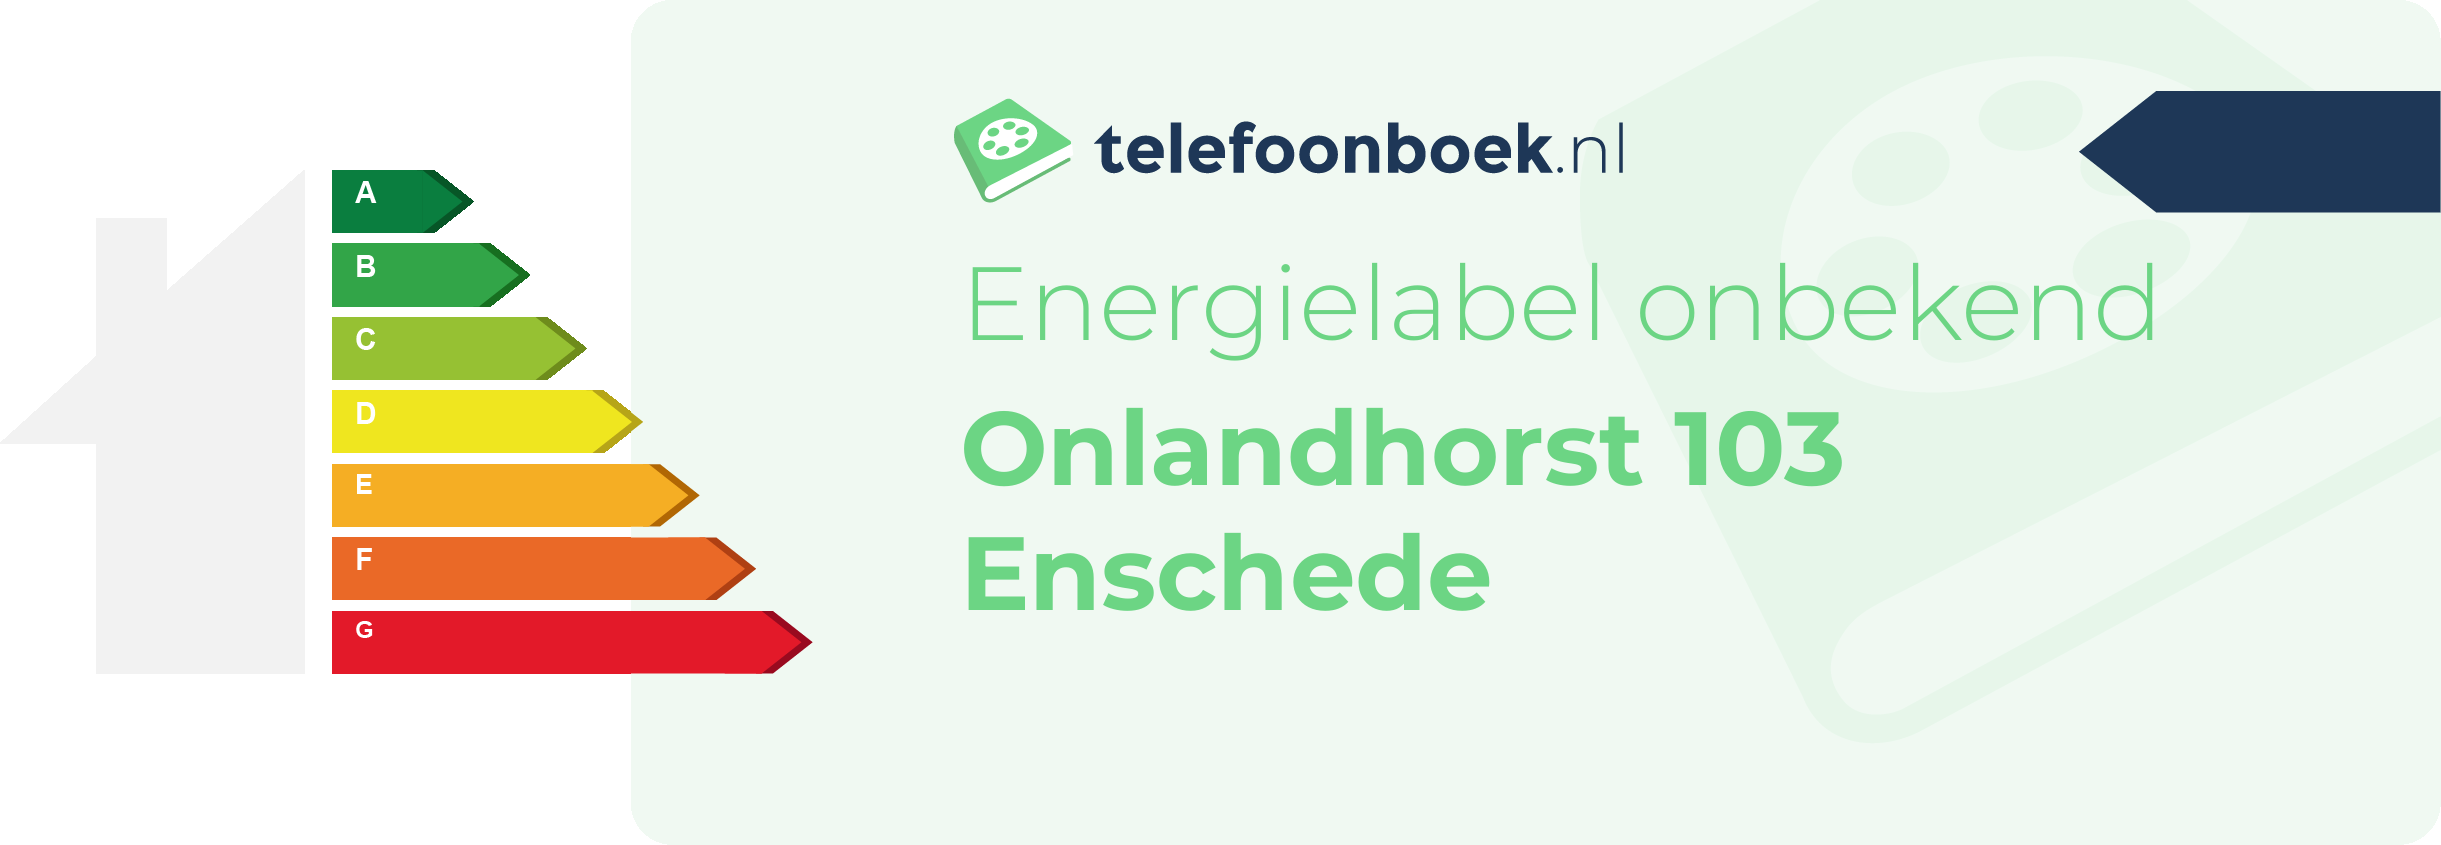 Energielabel Onlandhorst 103 Enschede